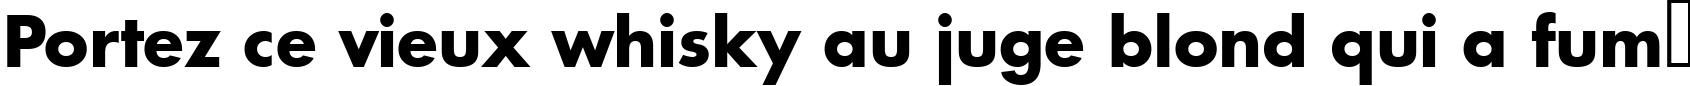 Пример написания шрифтом a_Futurica ExtraBold текста на французском